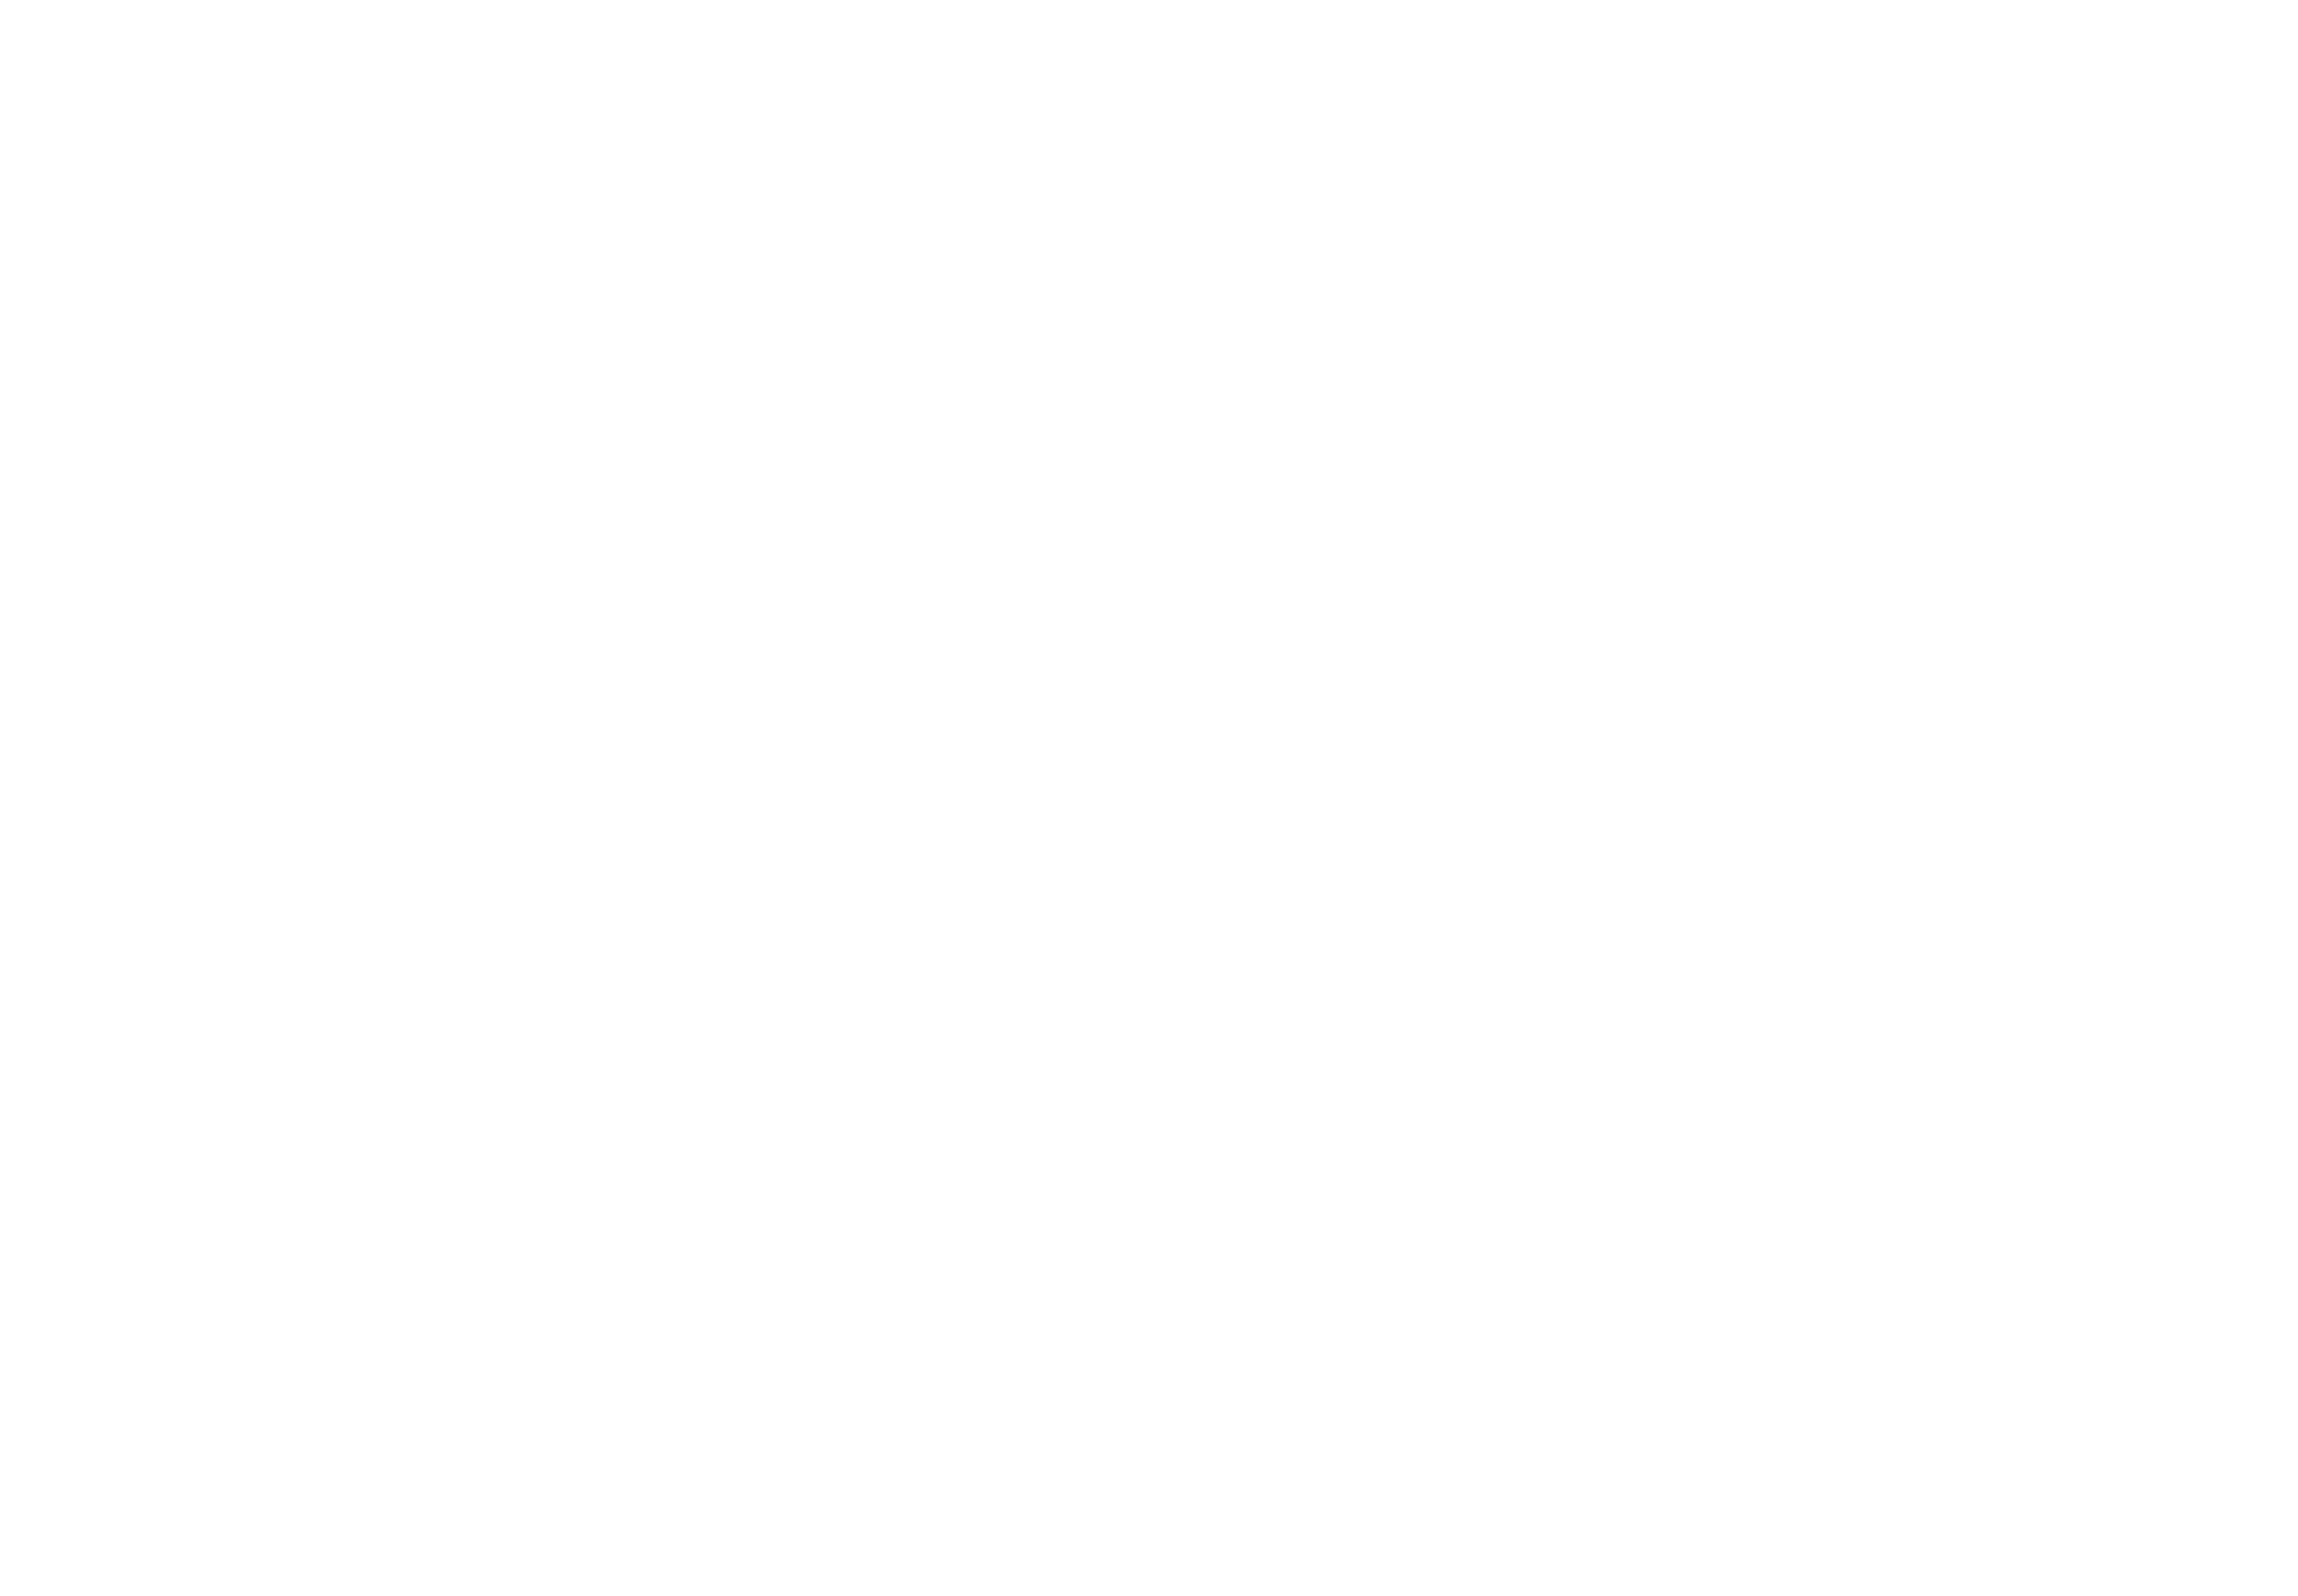 Alpha Consulting Logo